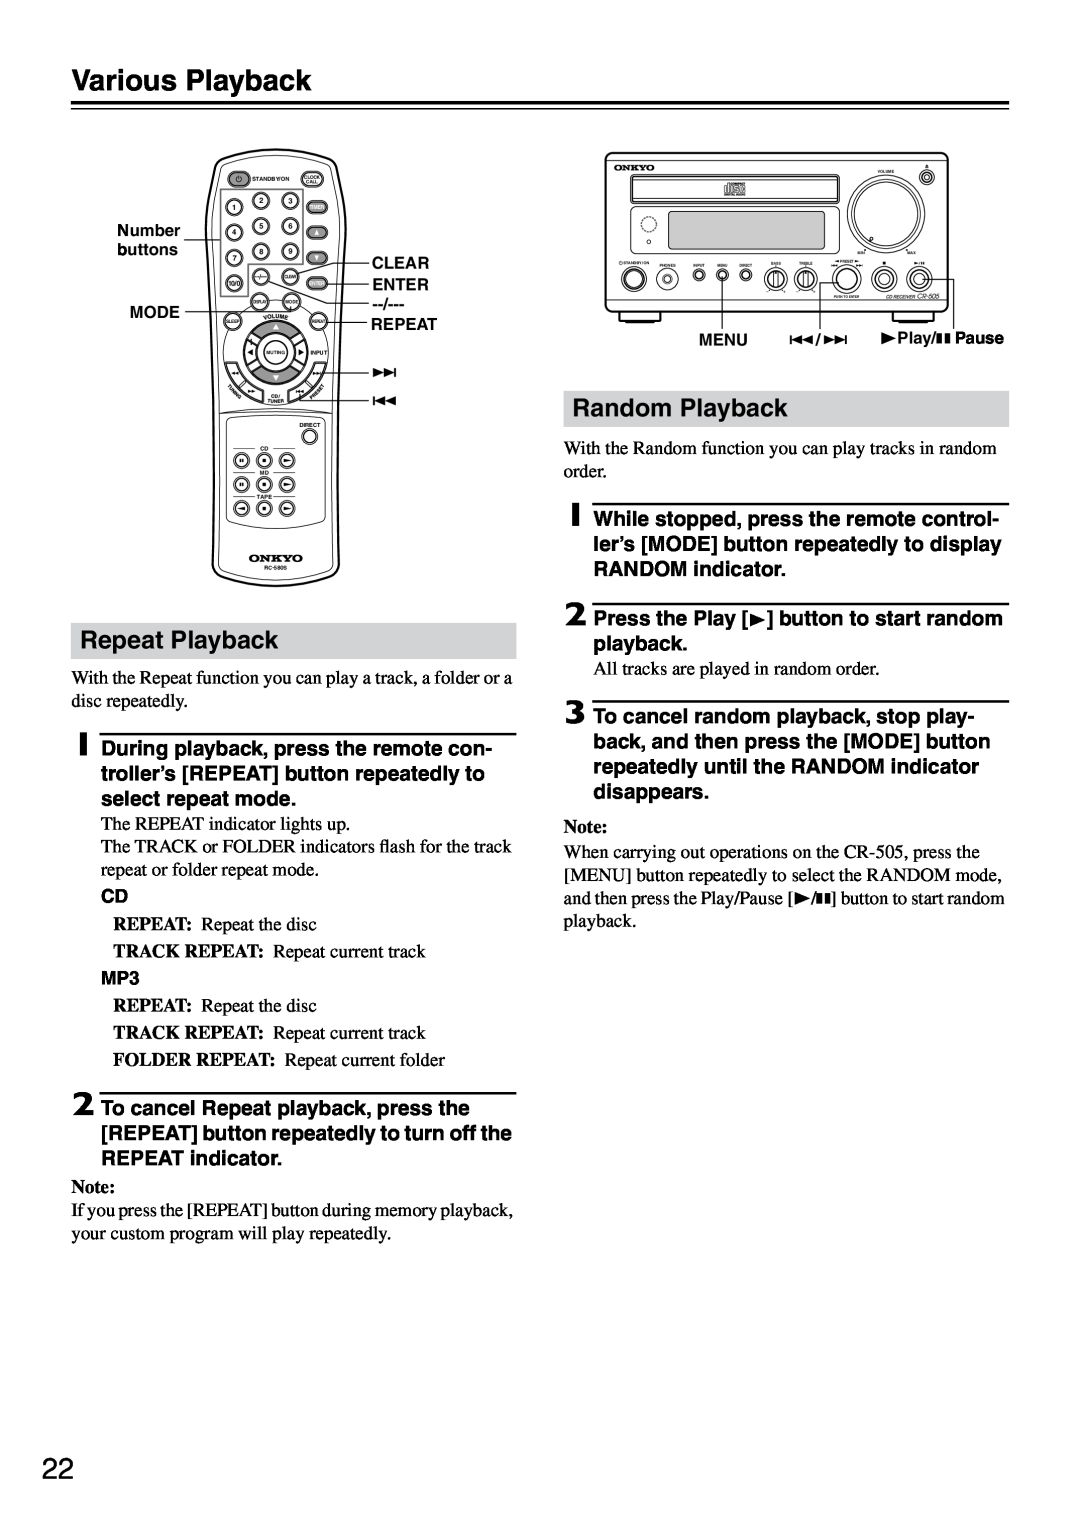 Onkyo CR-505 instruction manual Various Playback, Random Playback, Repeat Playback 